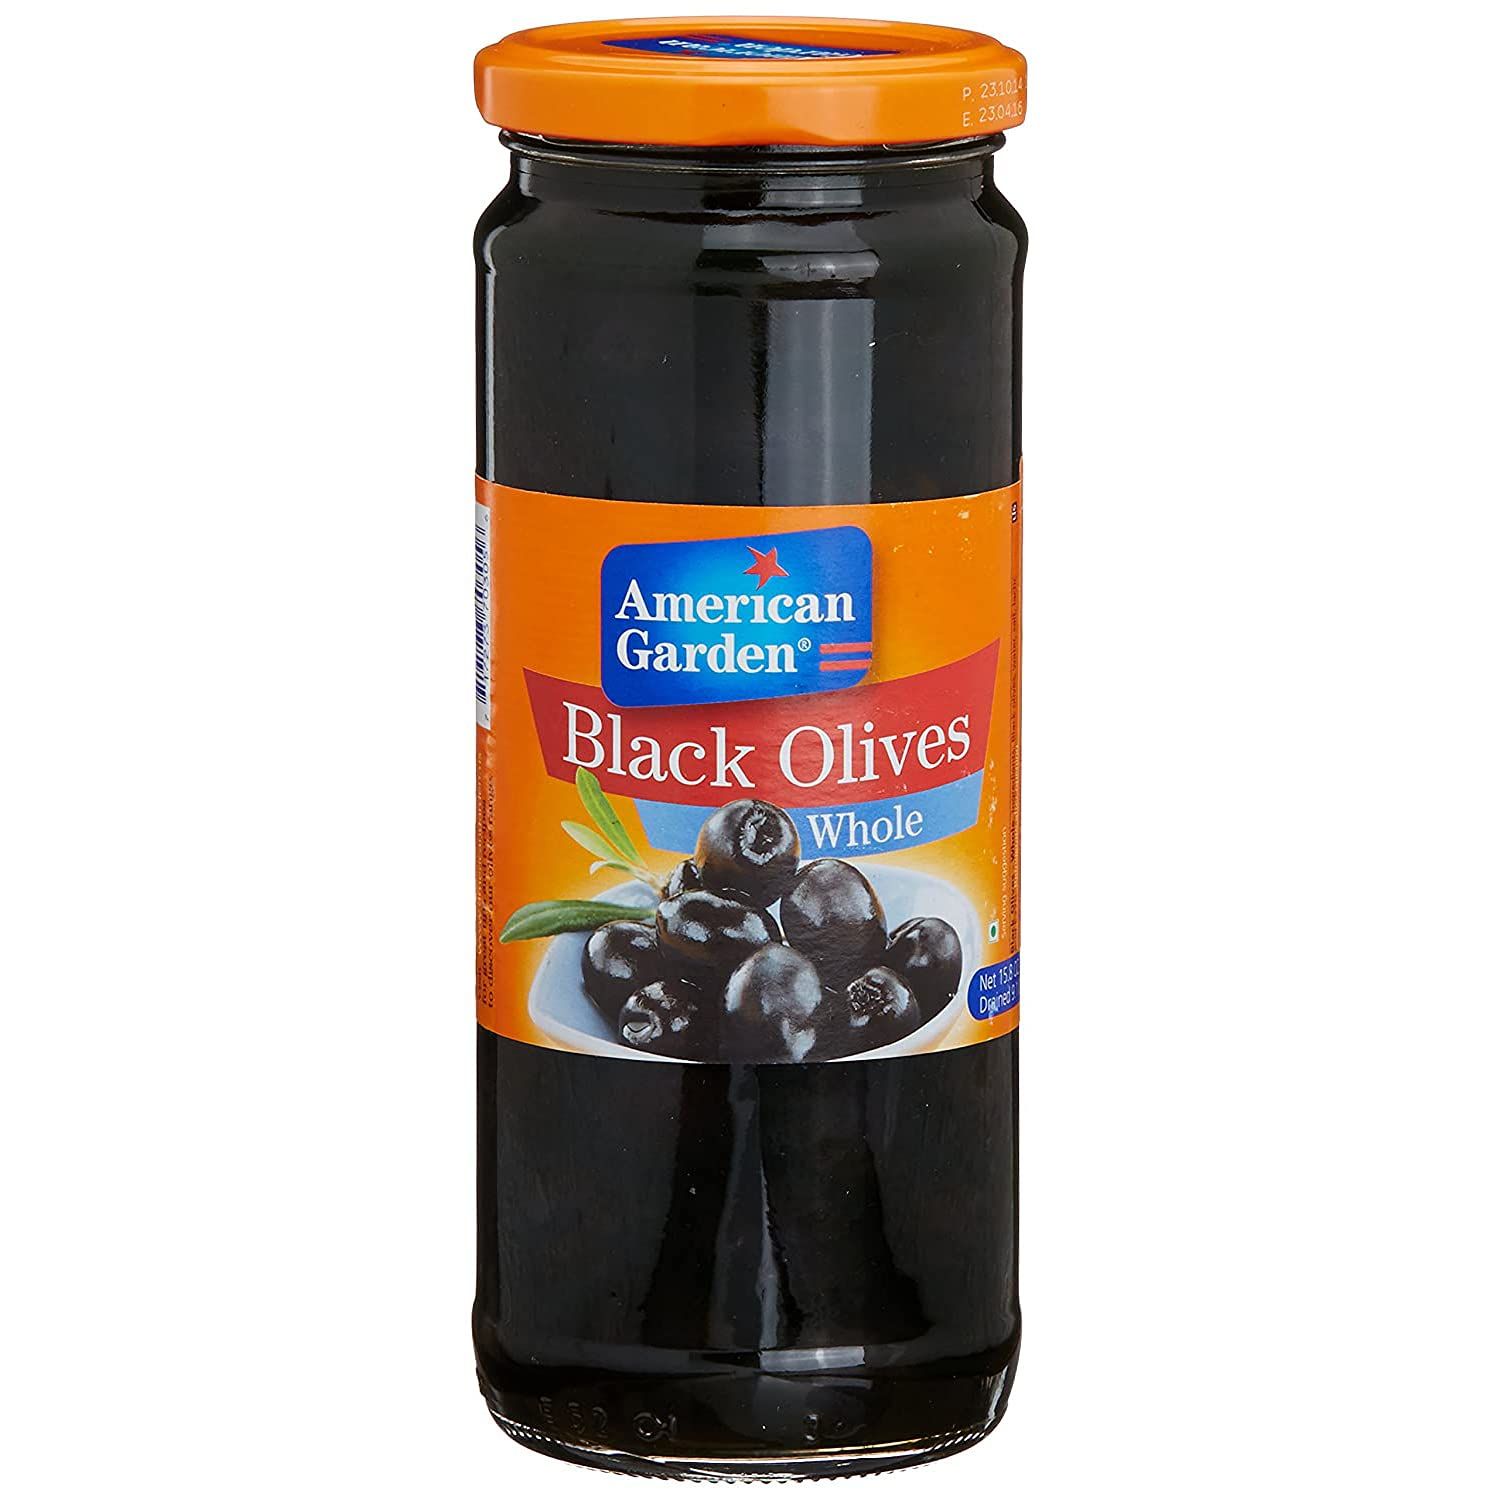 American Garden Black Olives Whole Image